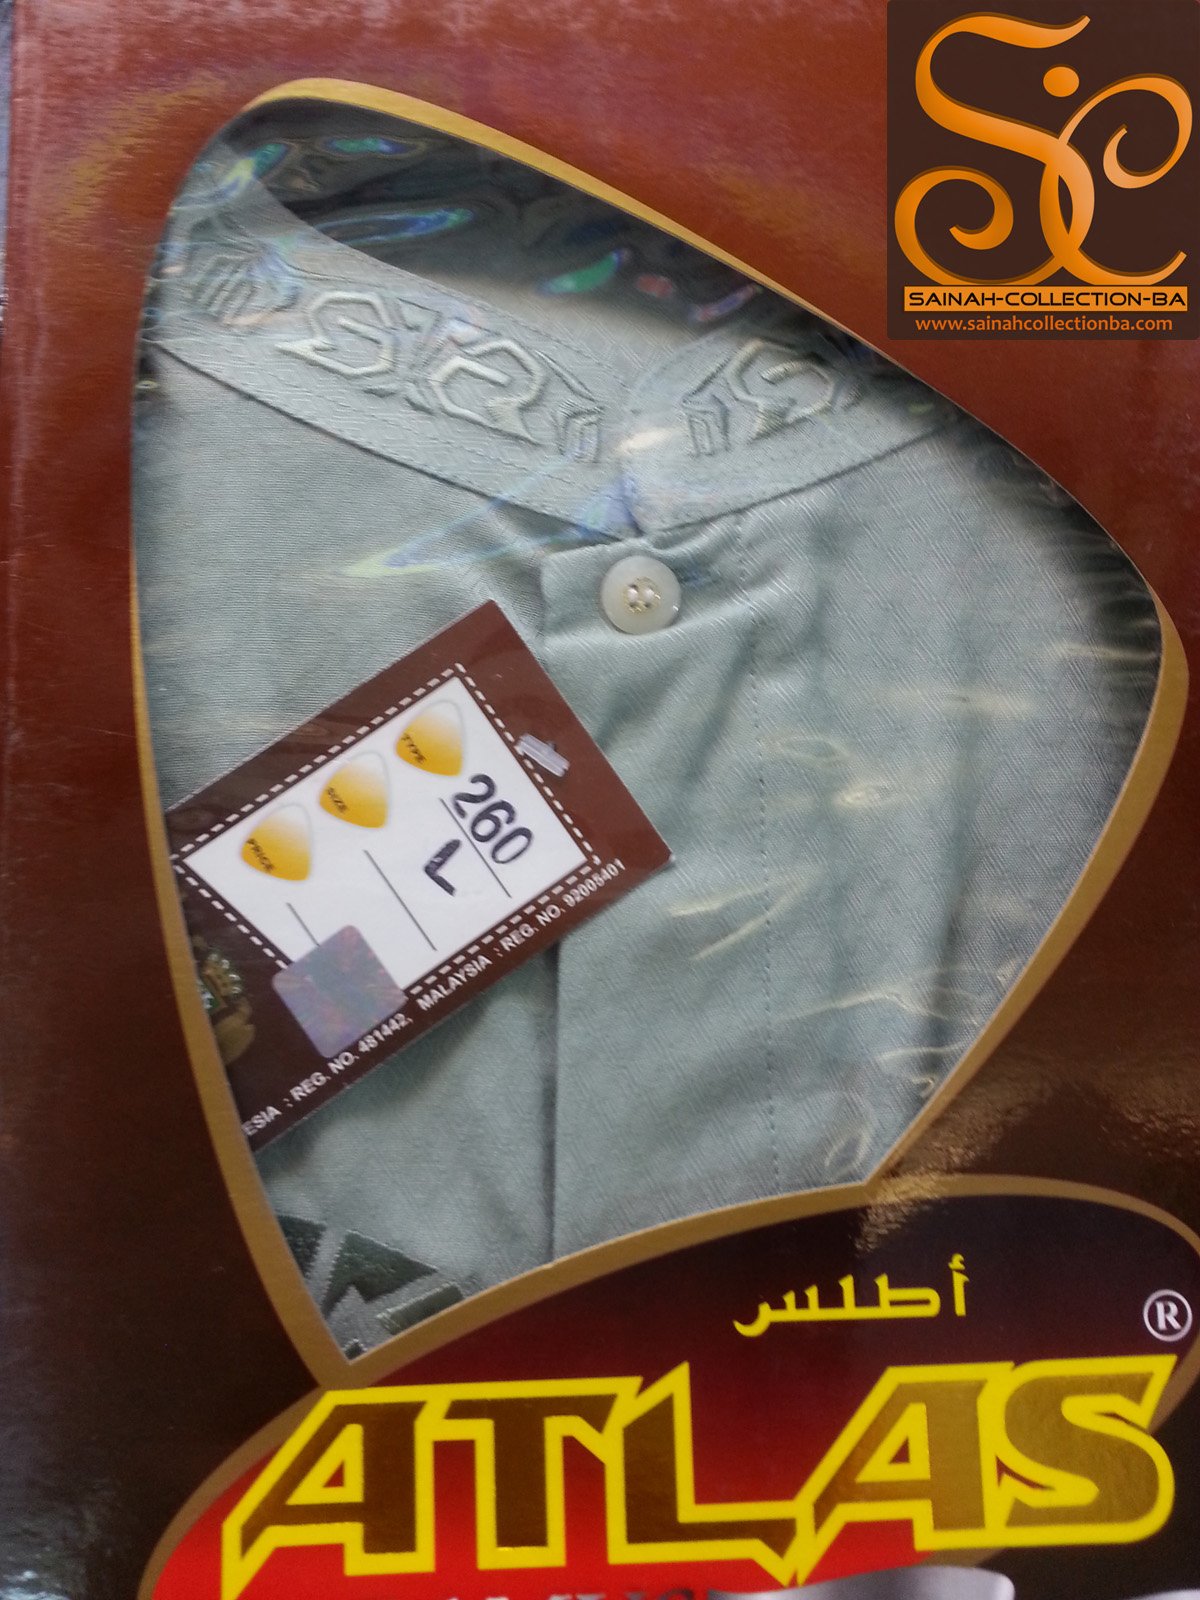 Sainah Collection BA Bamus Baju Muslim ATLAS 